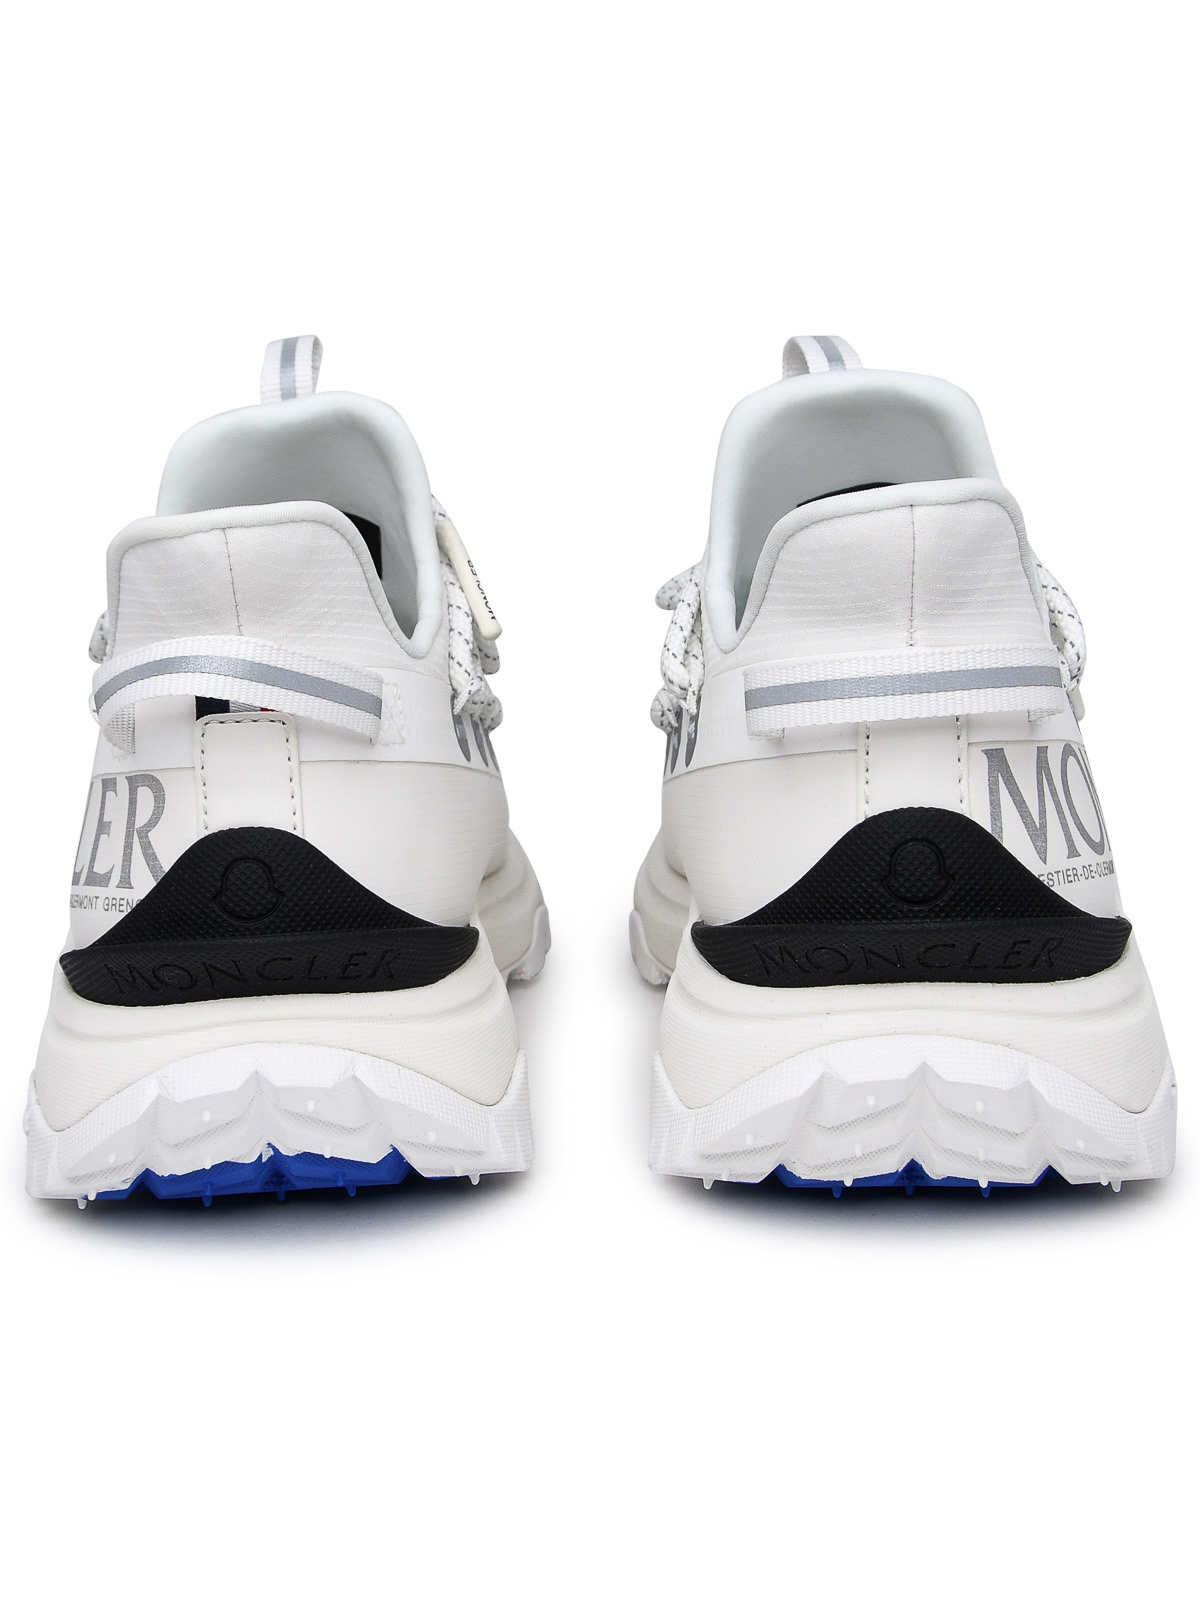 Shop Moncler Sneaker Trail Grip In Poliammide Bianca In Blanco